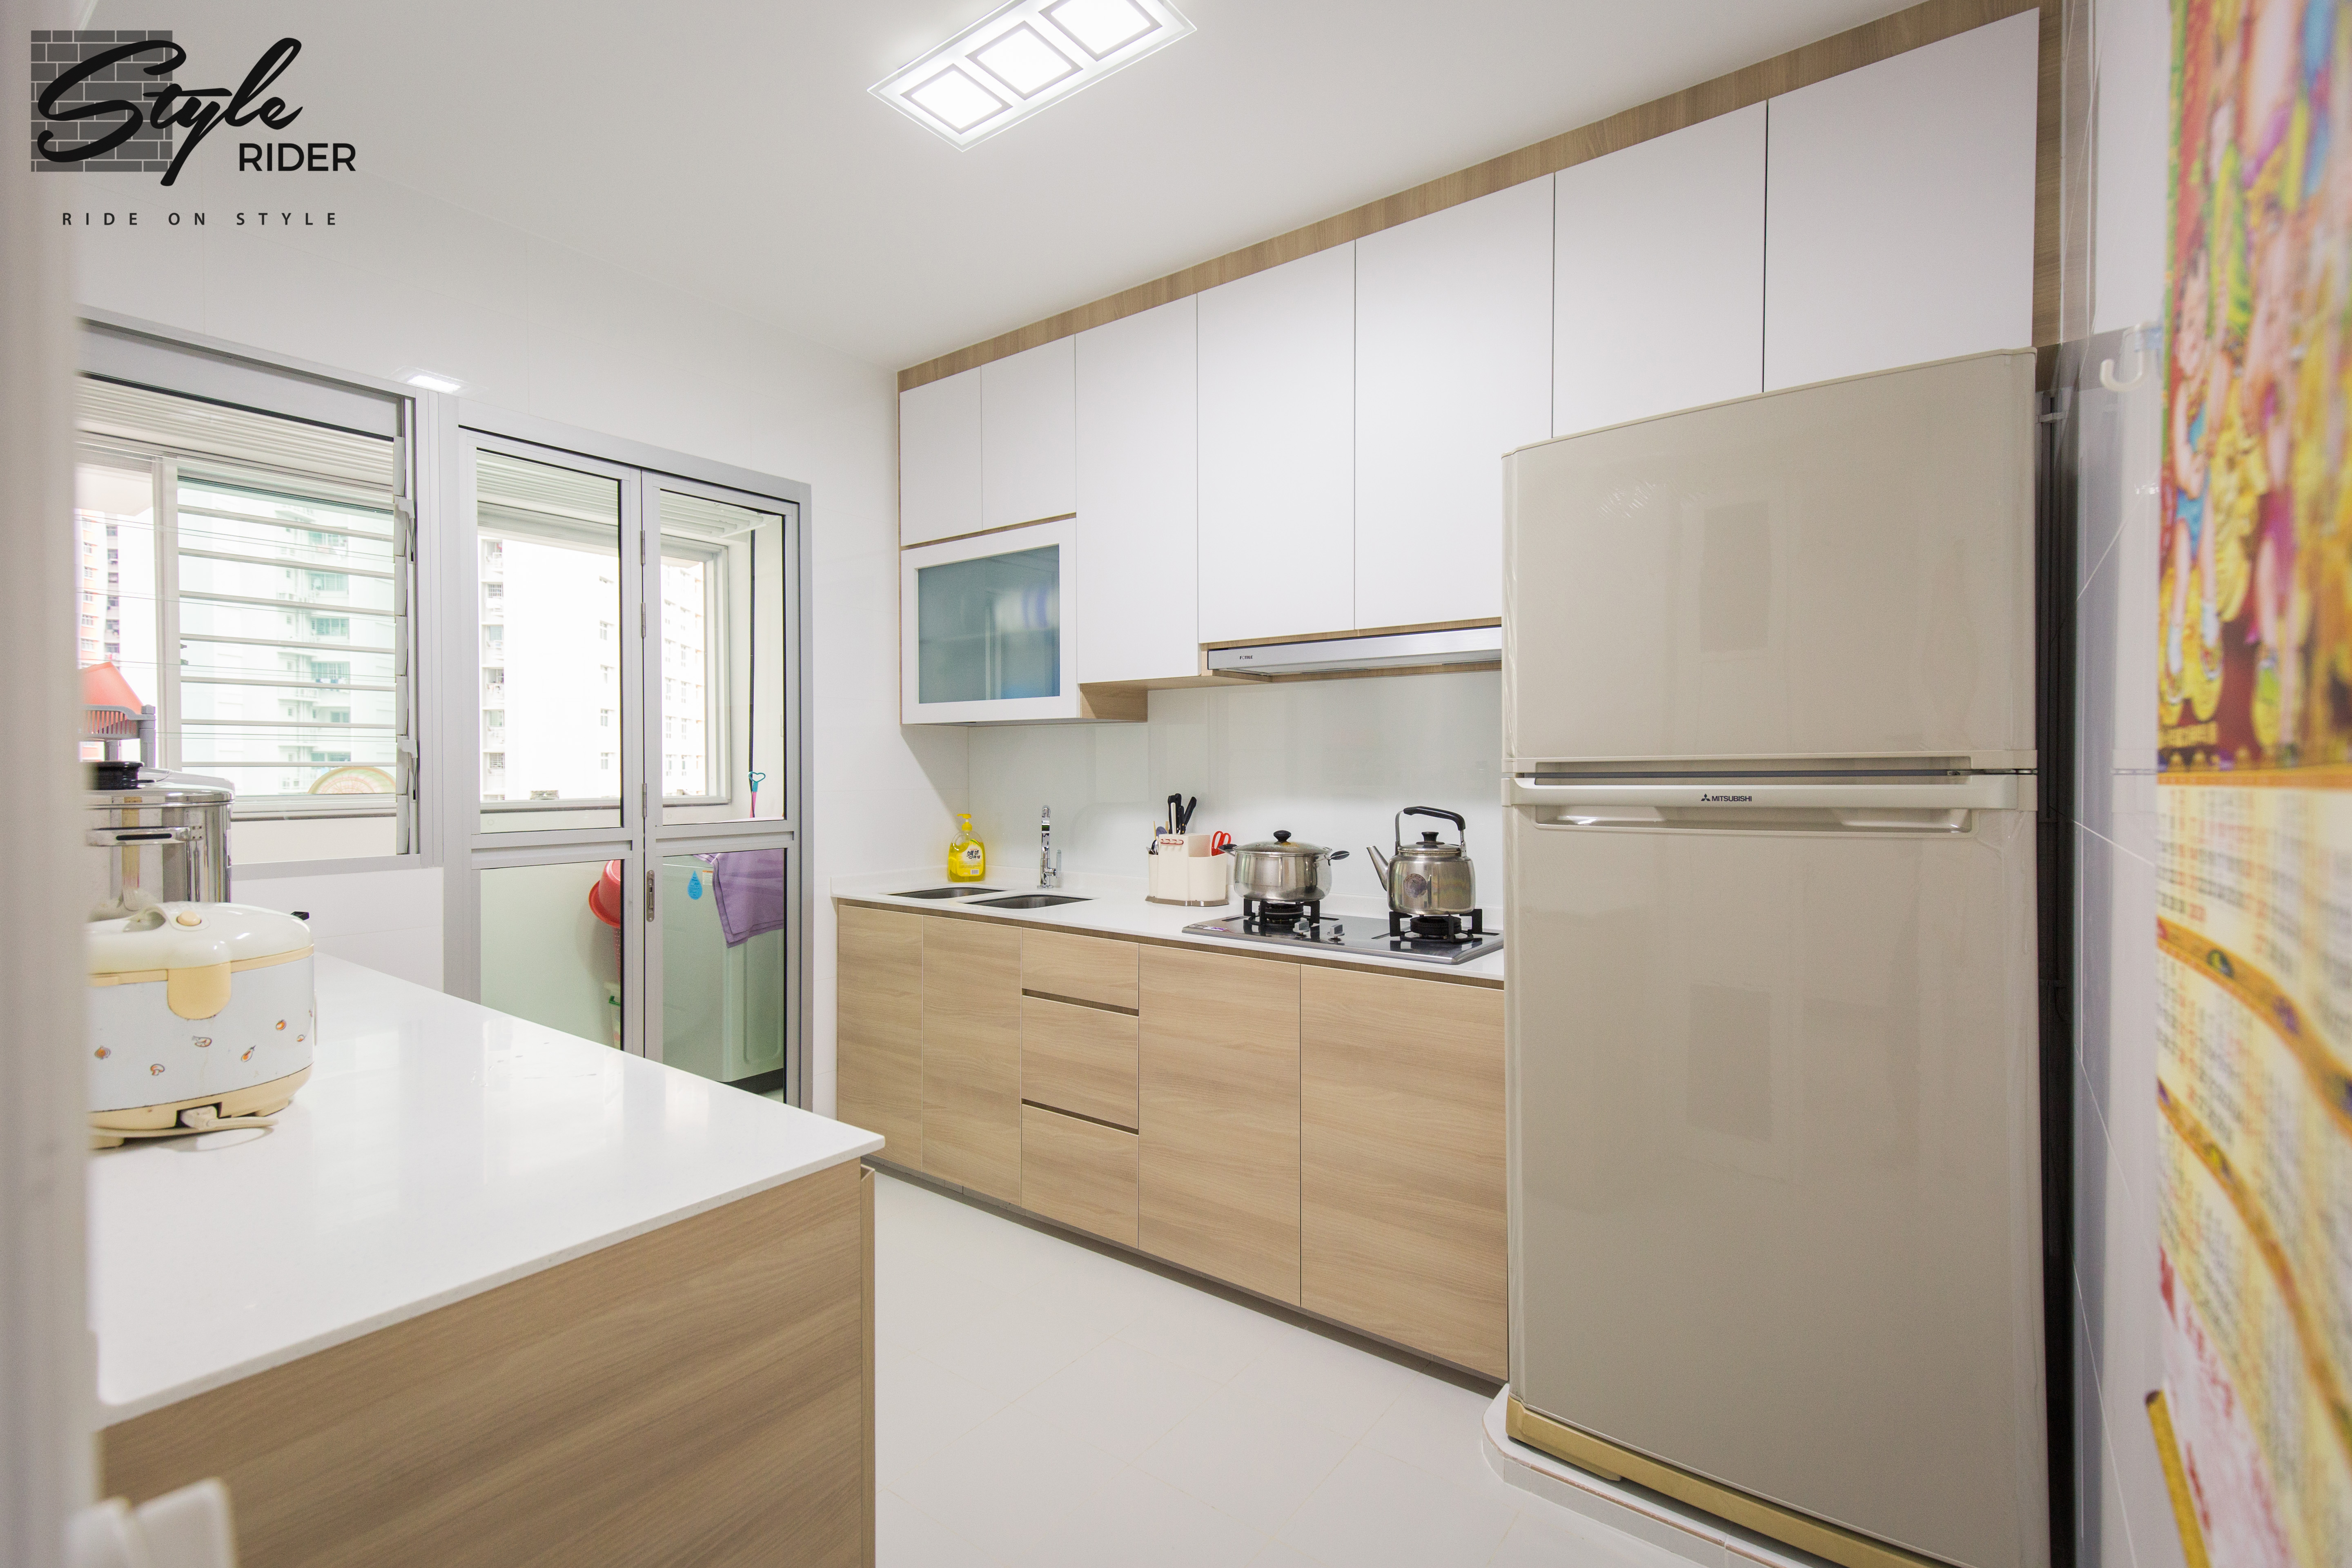 Eclectic, Modern, Scandinavian Design - Kitchen - HDB 4 Room - Design by Stylerider Pte Ltd